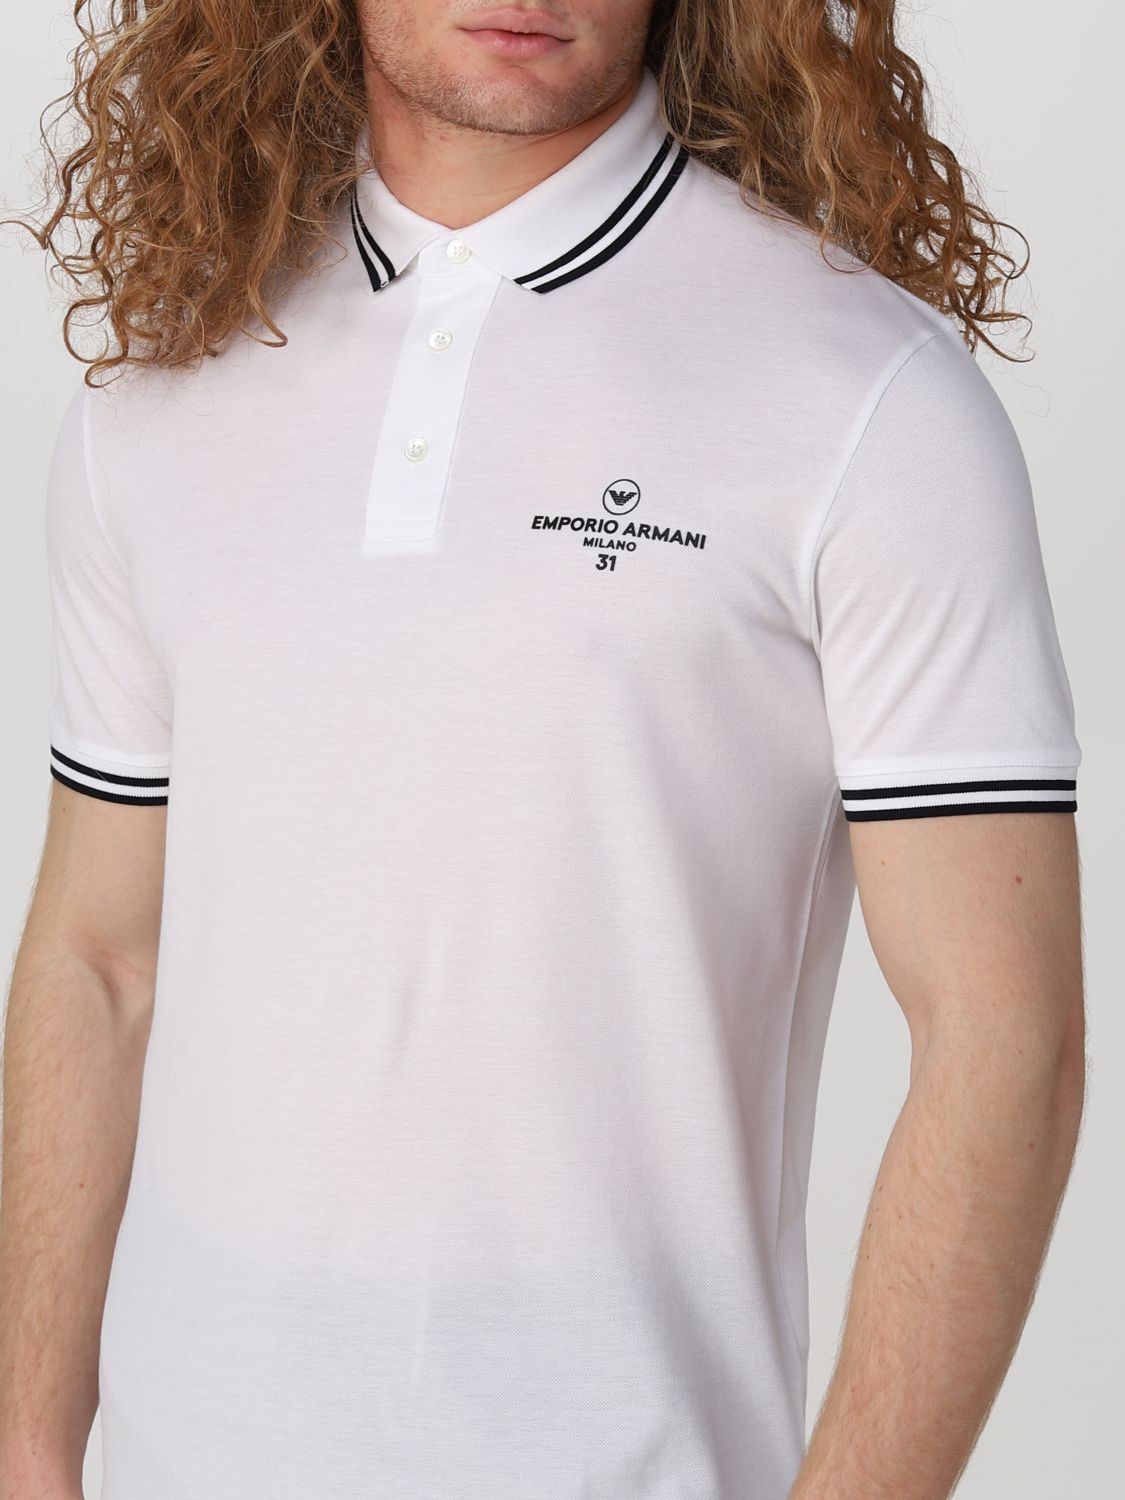 EMPORIO ARMANI: polo shirt for man - White | Emporio Armani polo shirt  3L1FAG1JTKZ online on 